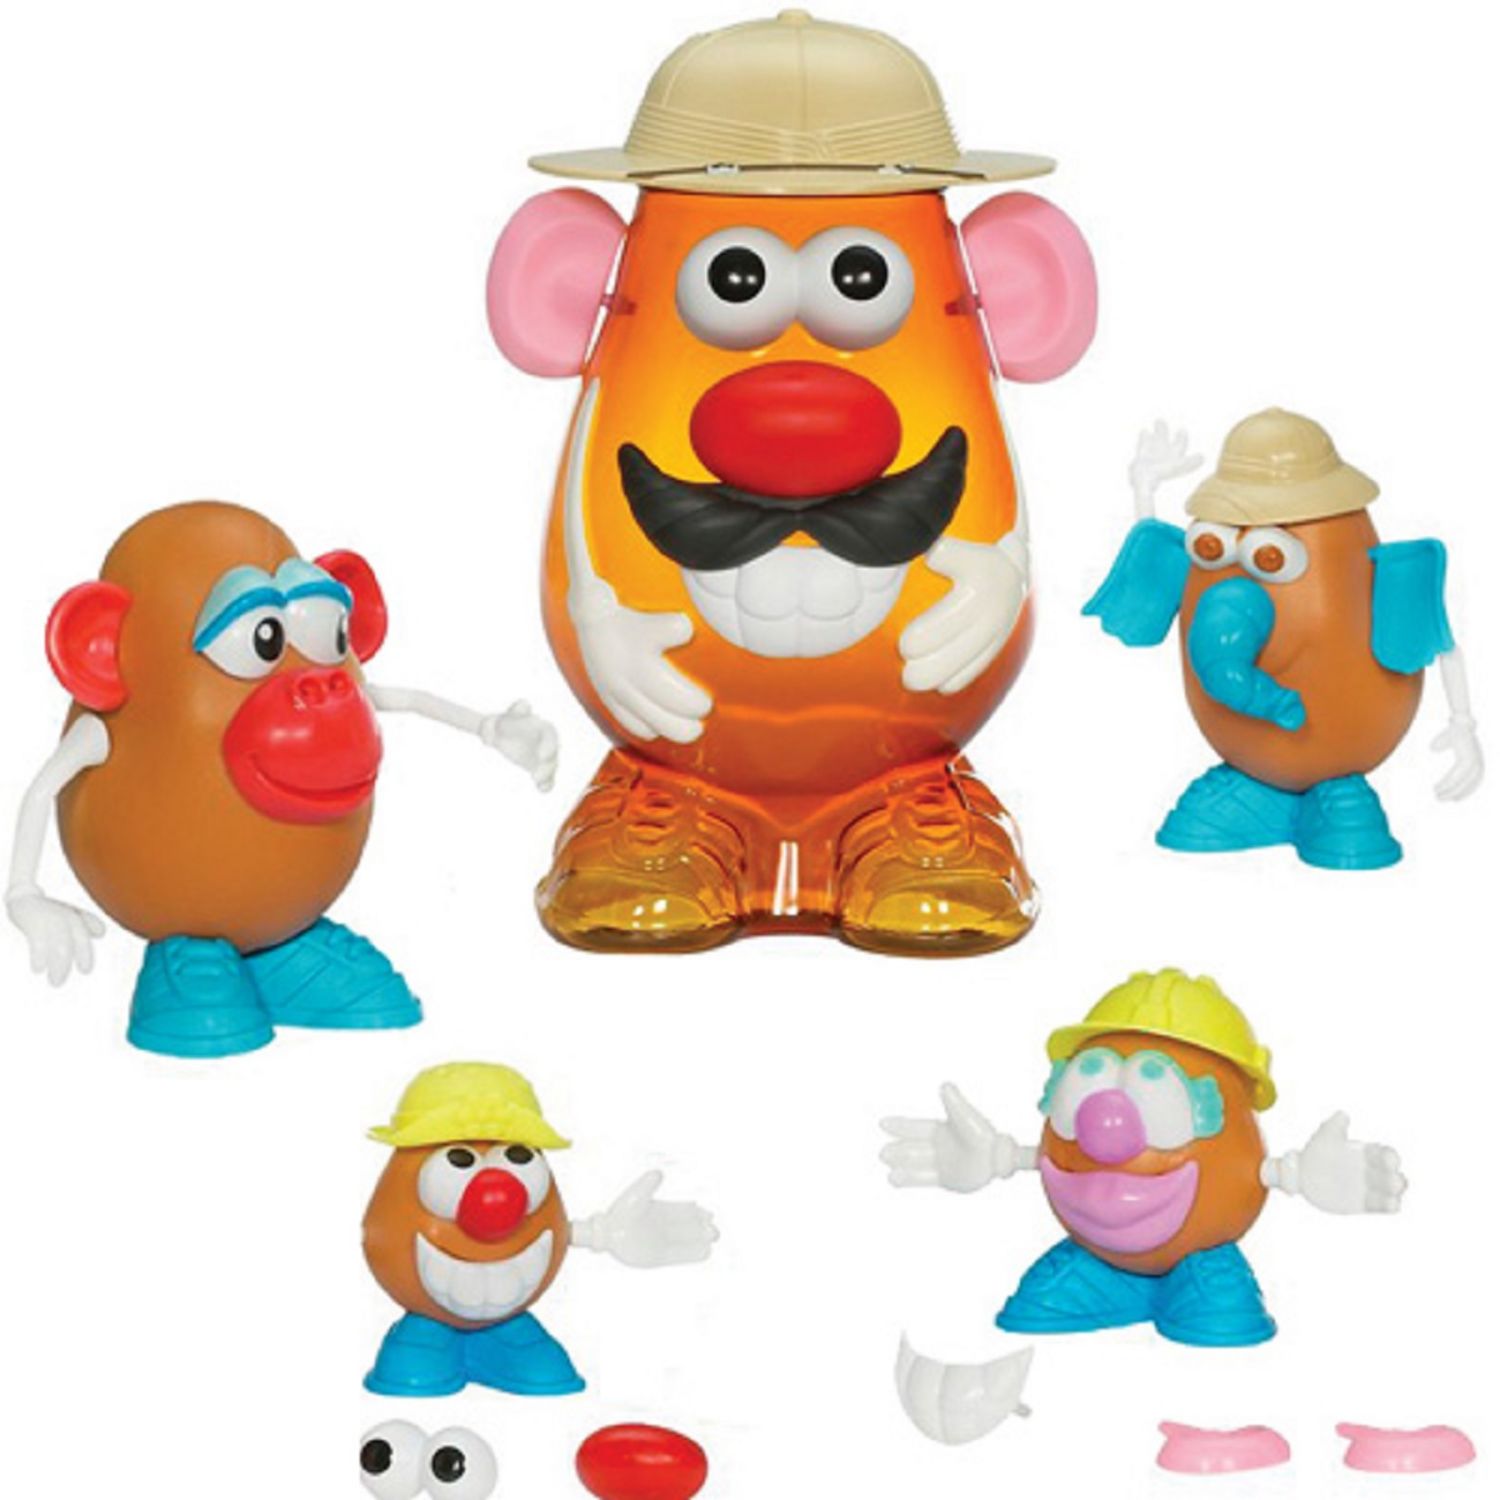 Mr patate safari - Playskool